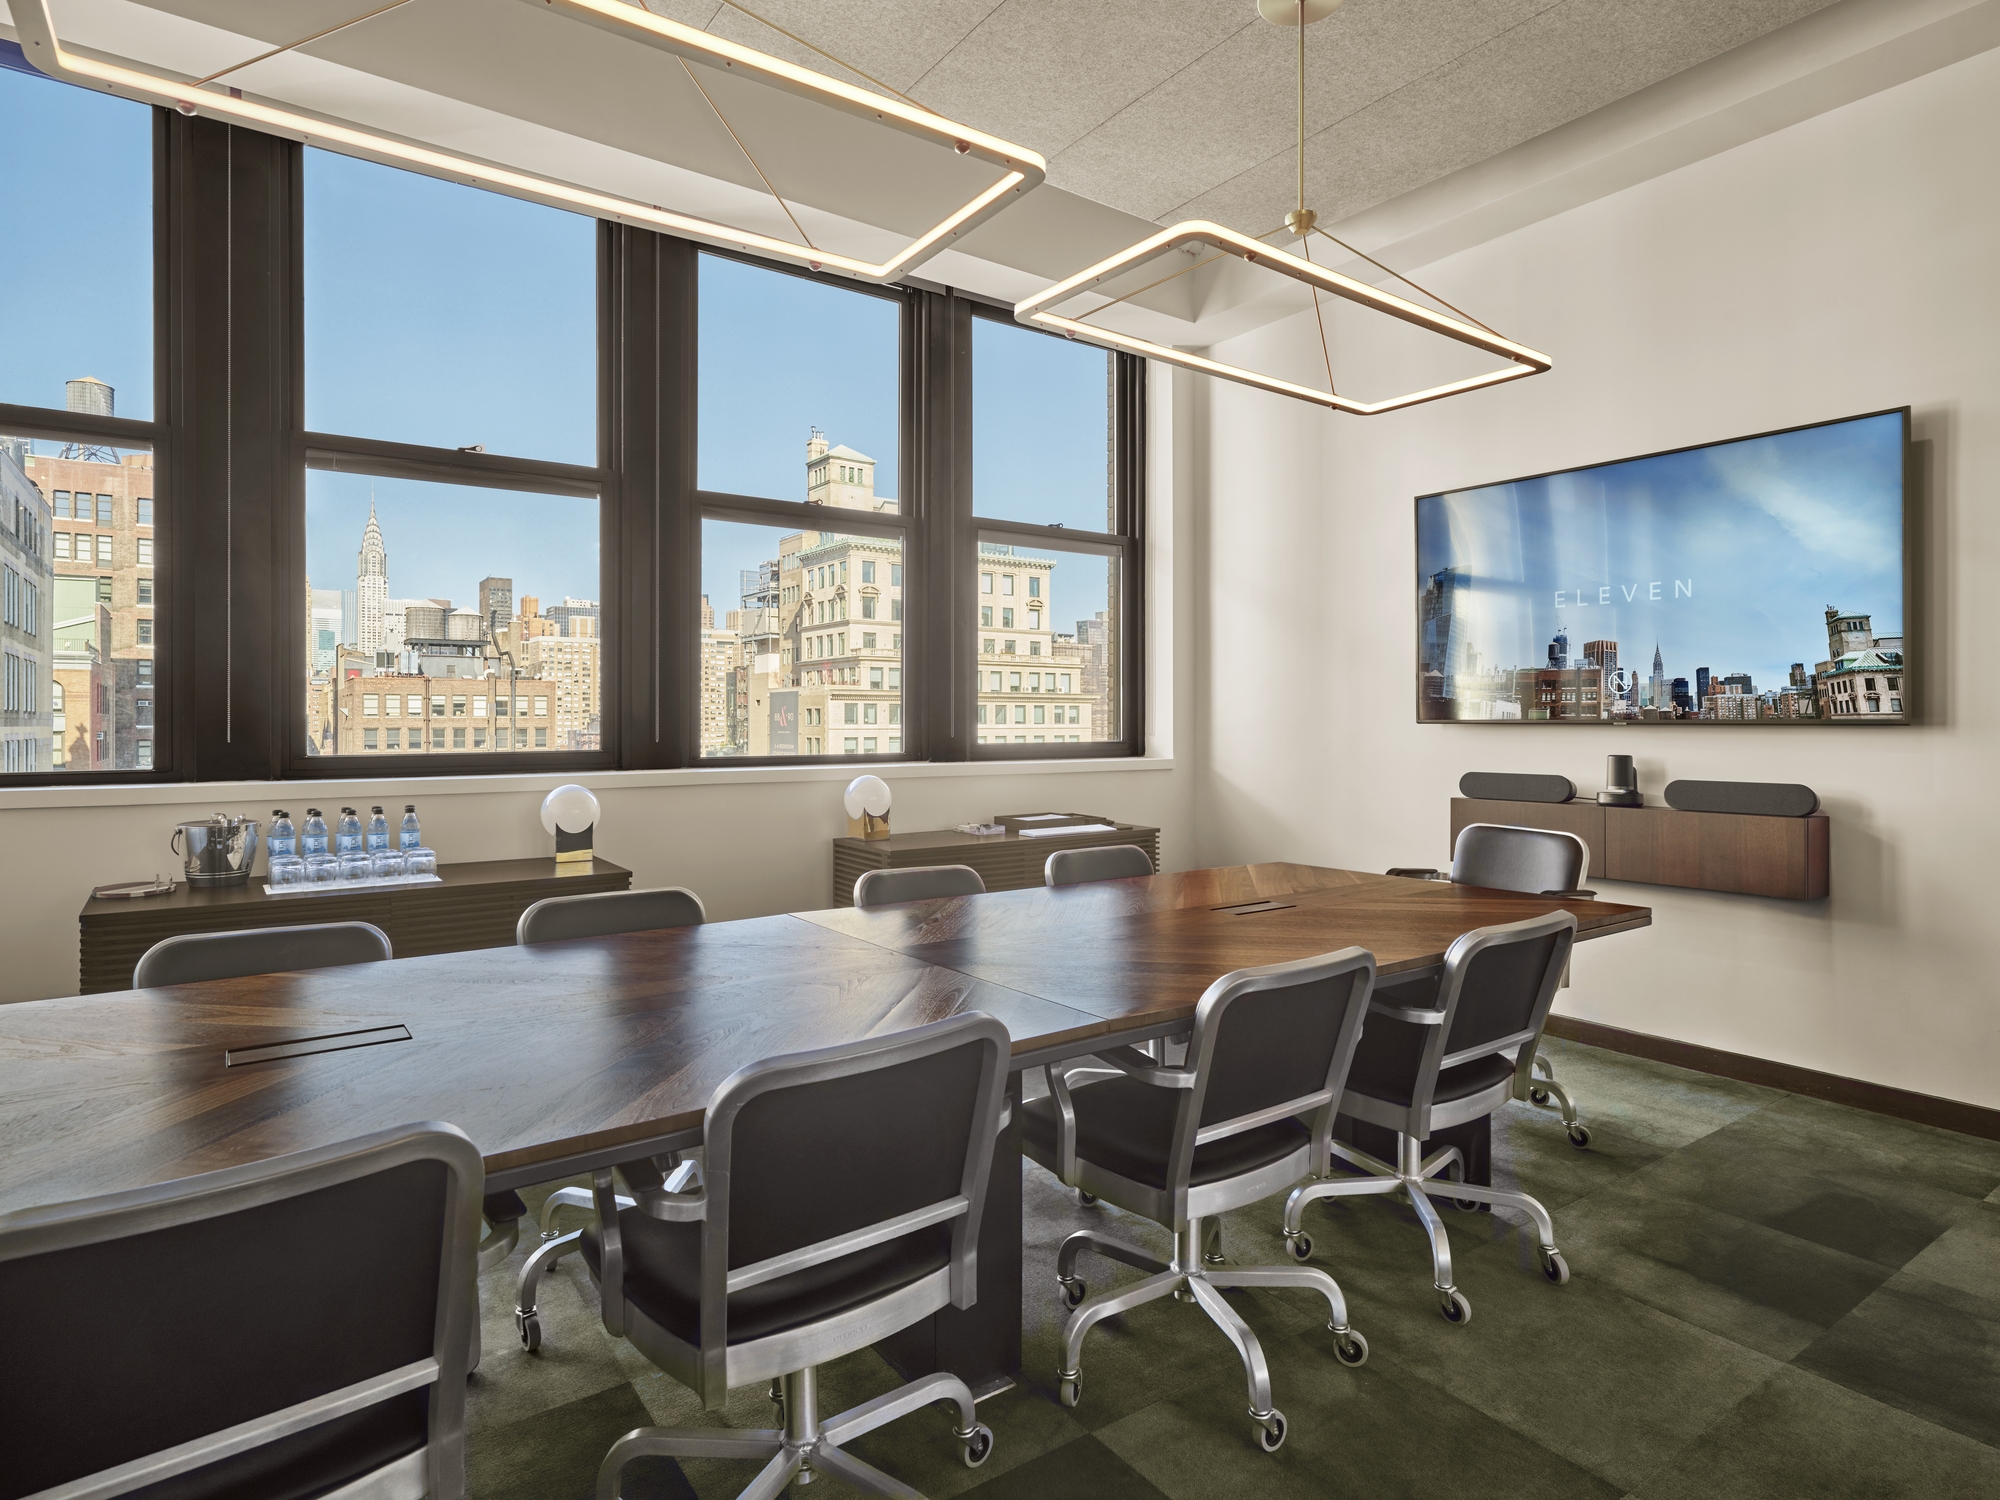 图片[10]|NeueHouse Madison Square ELEVEN Coworking Offices-纽约市|ART-Arrakis | 建筑室内设计的创新与灵感